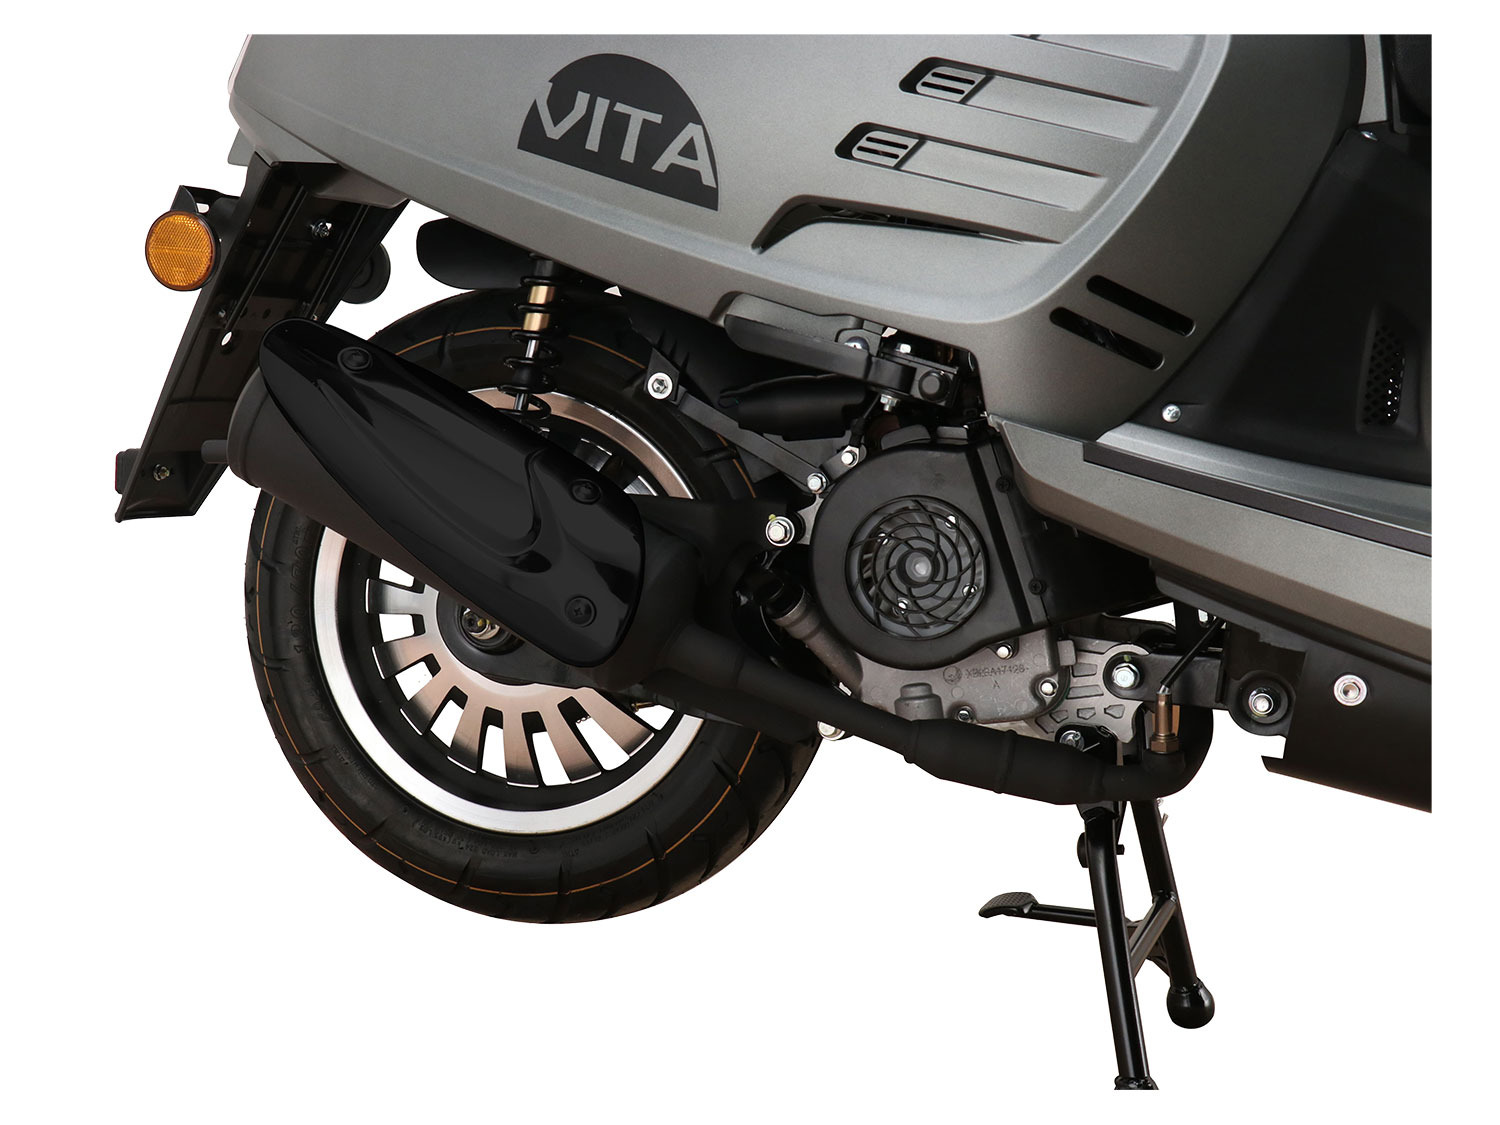 Vita Alpha LIDL EURO5 125ccm | Mofaroller Motors